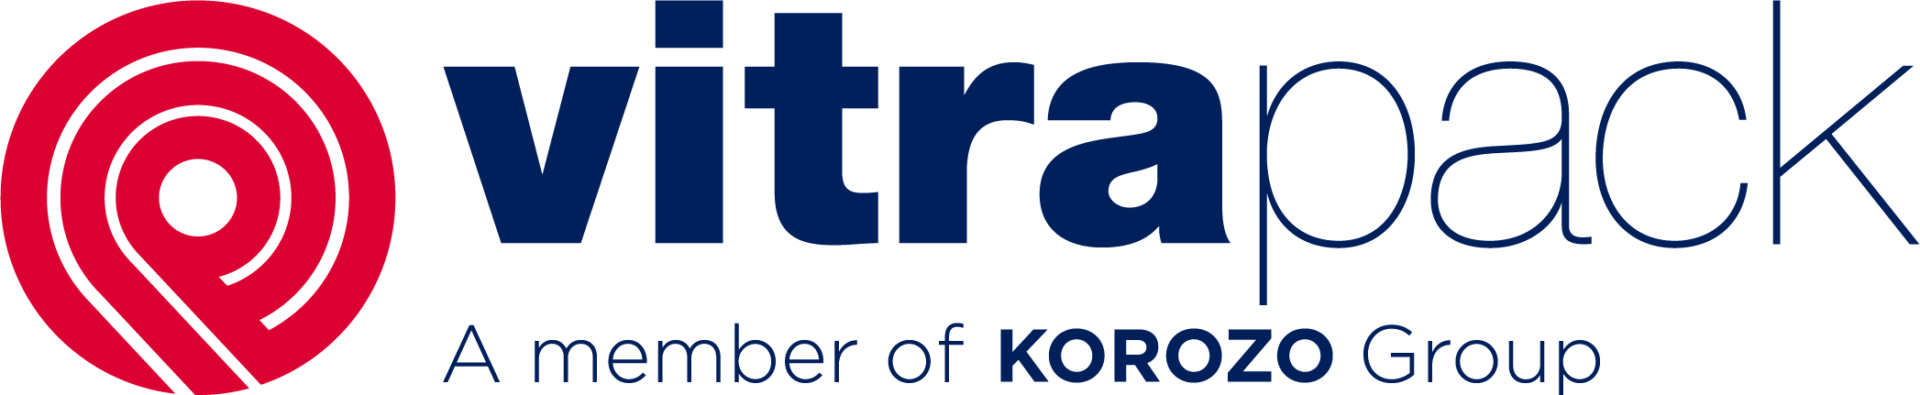 VIT-8845-Vitrapack-member-of-Korozo-rgb